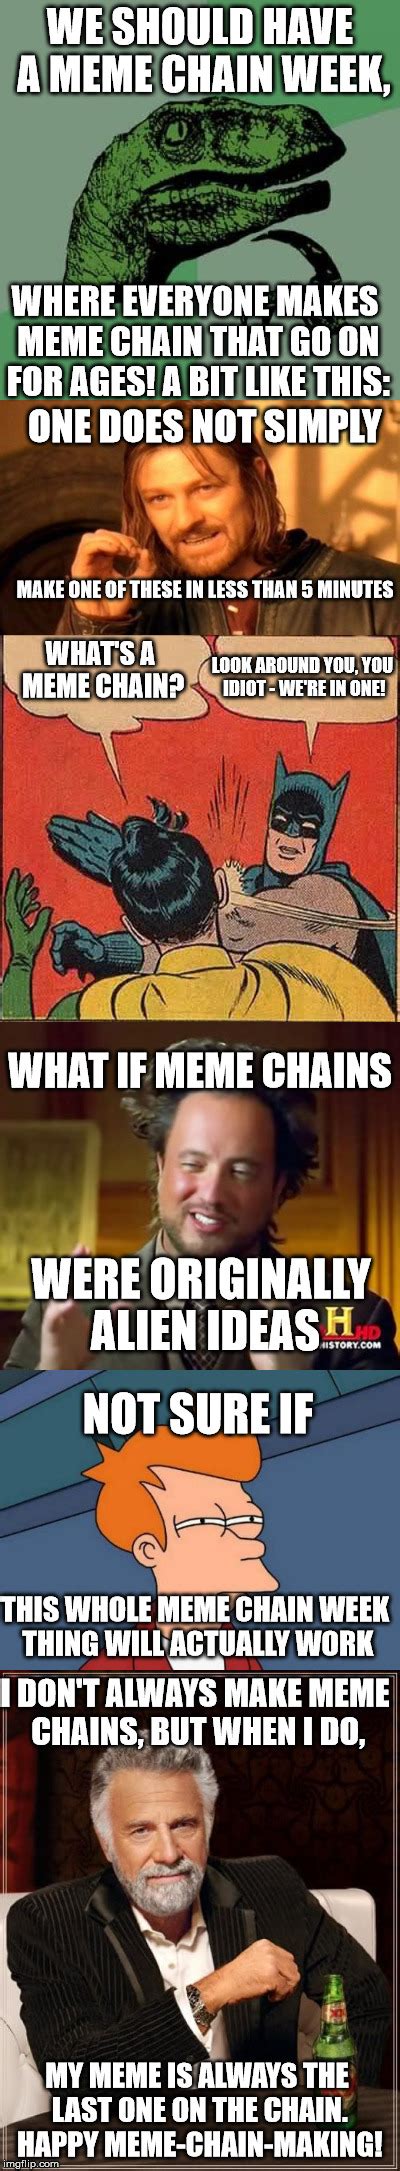 meme chains meme chain week imgflip